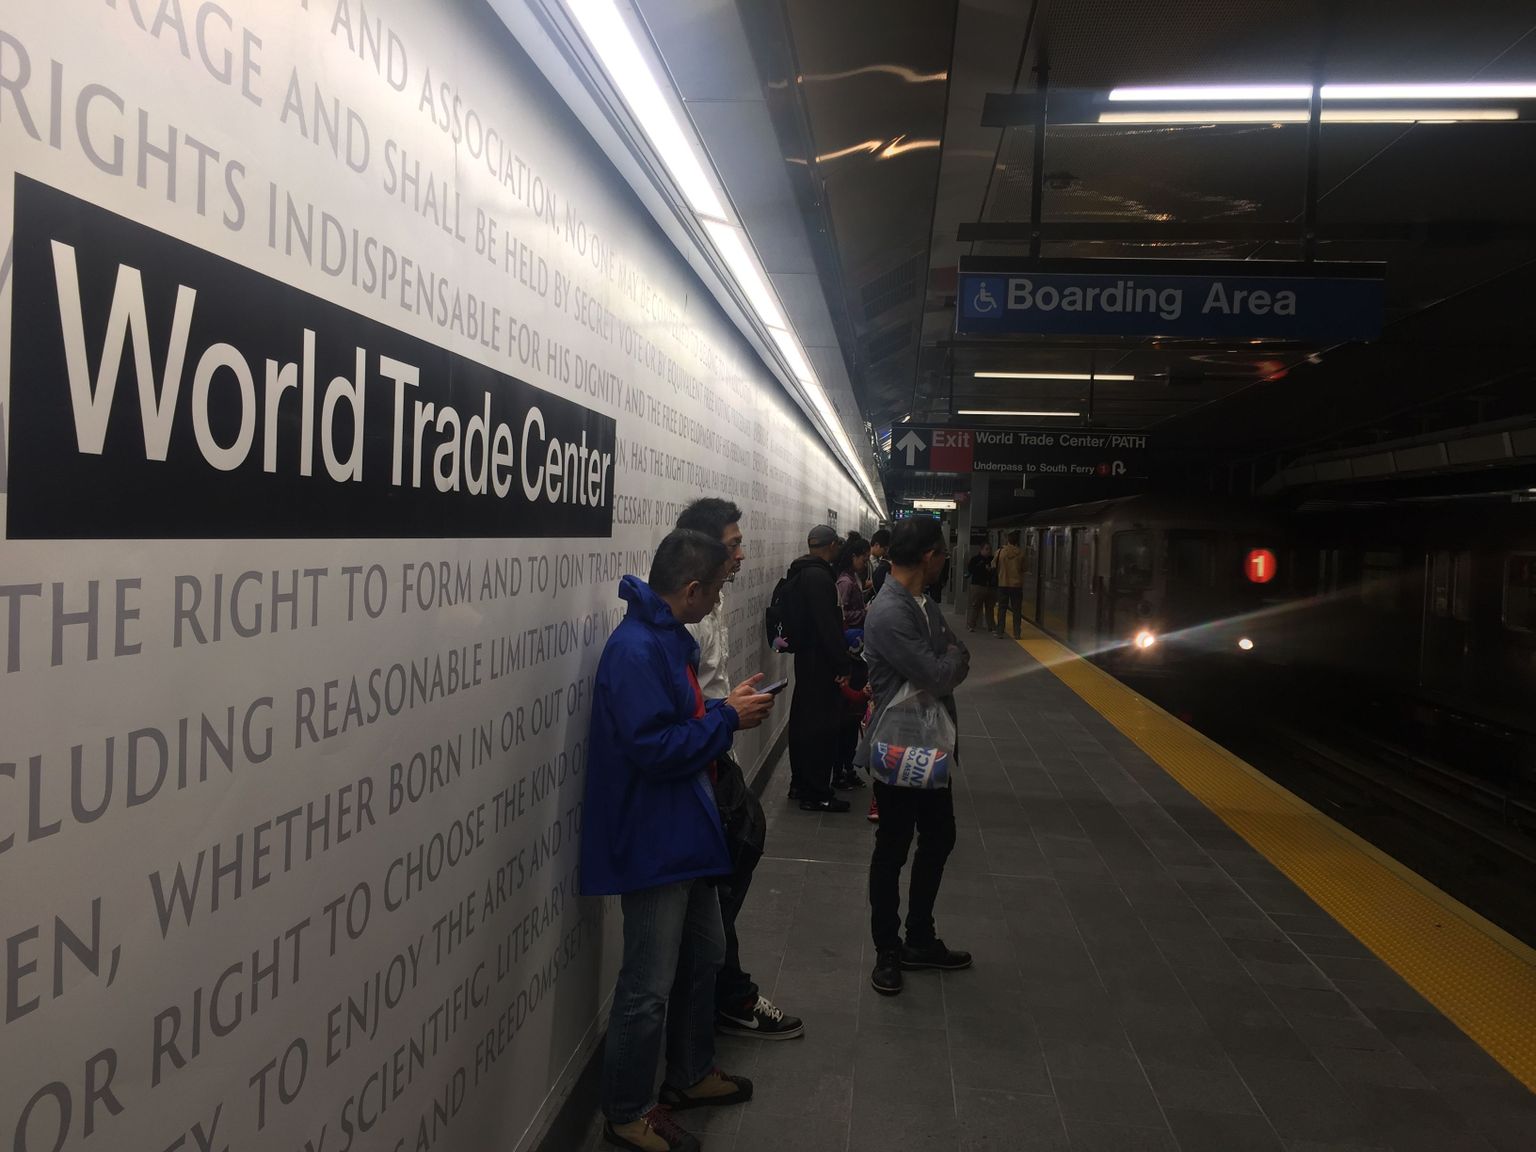 Reisijad metroojaamas World Trade Center Cortlandt.